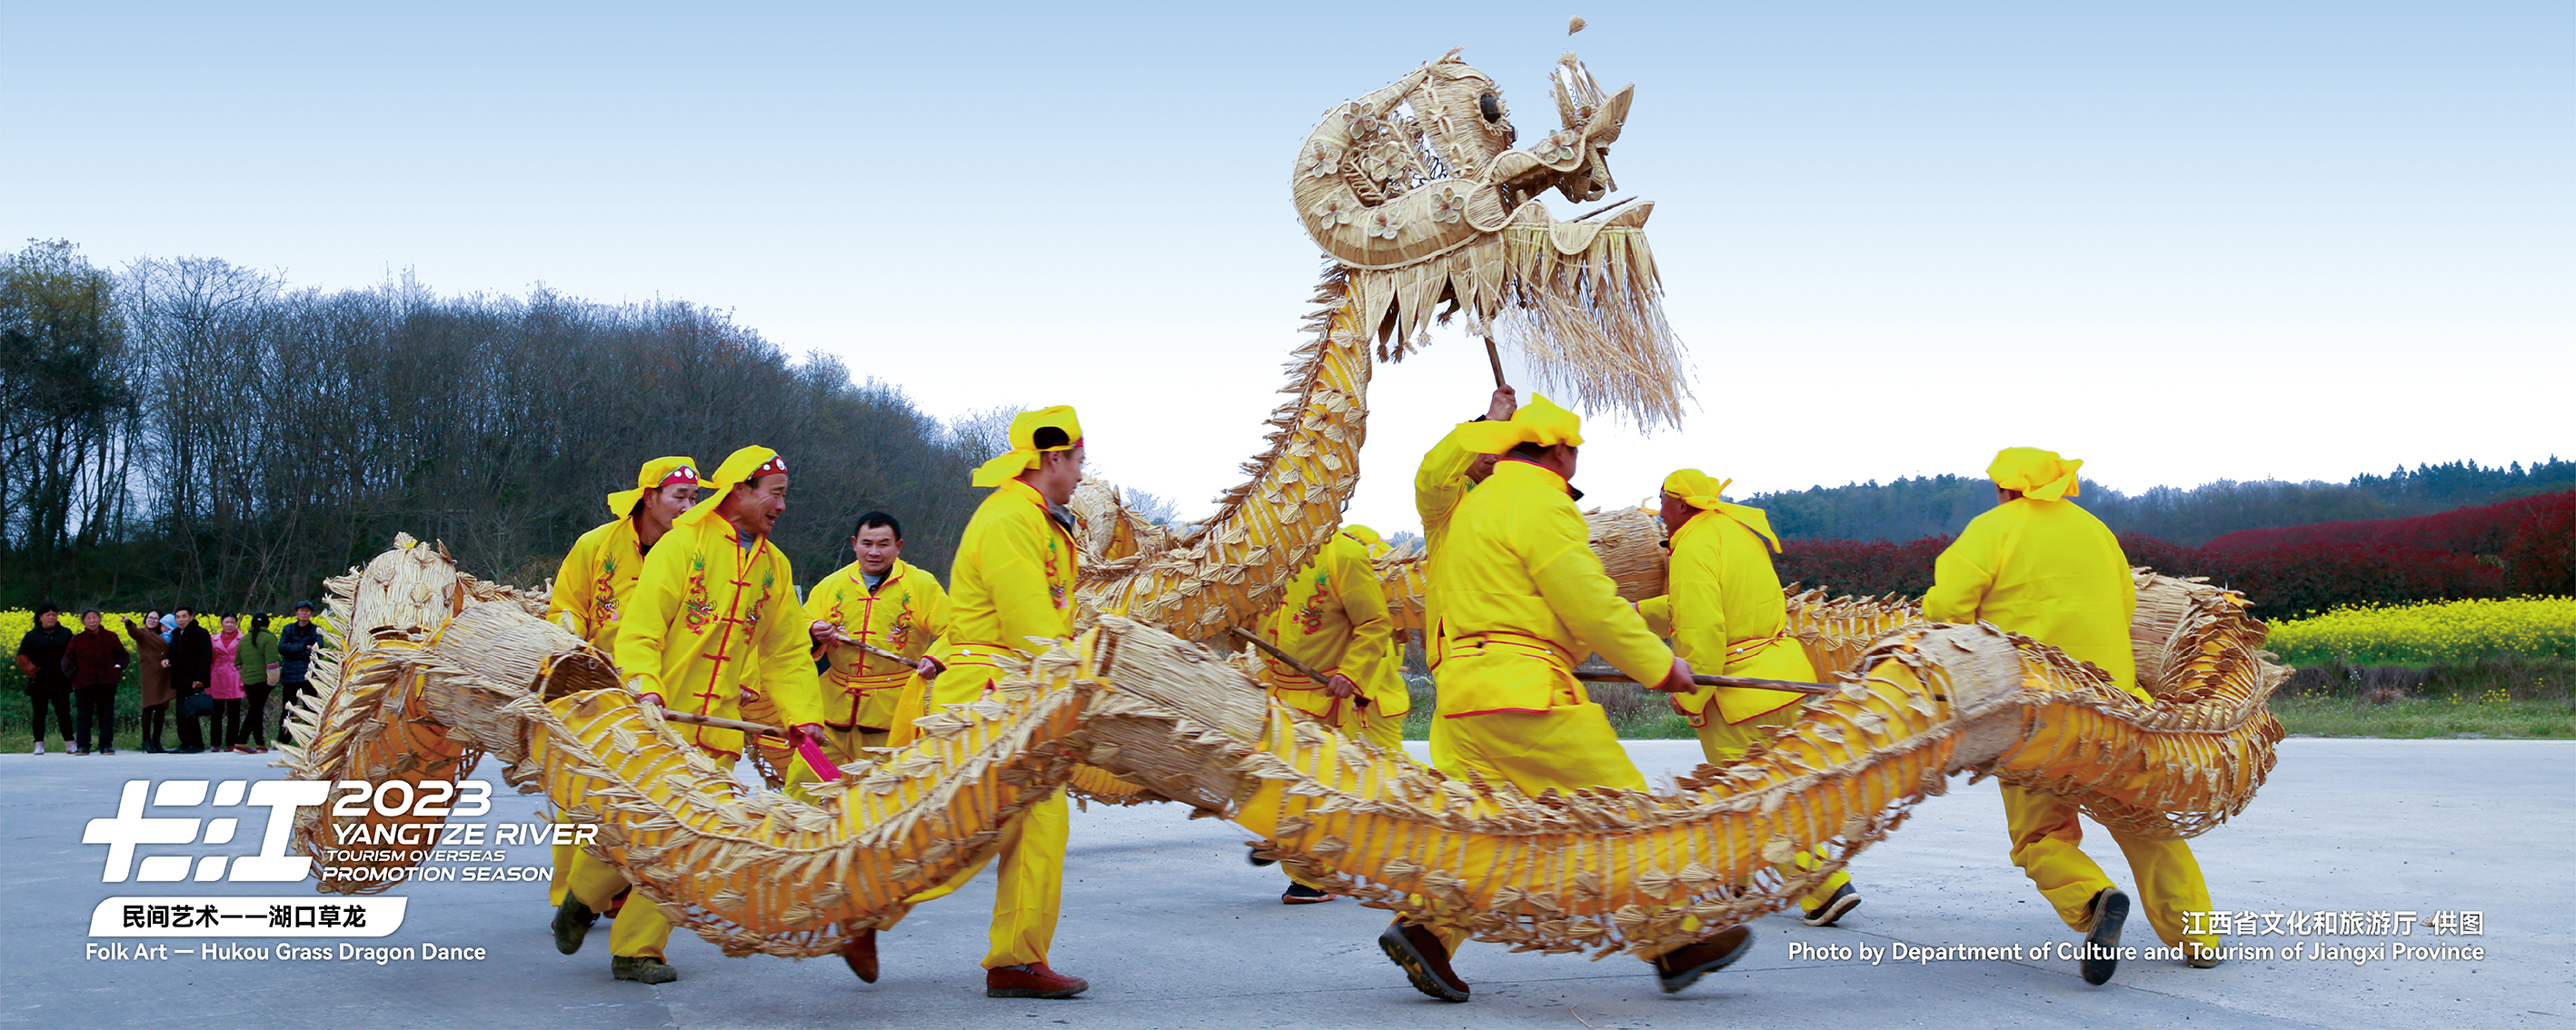 Folk Art — Hukou Grass Dragon Dance /Photo provided to CGTN